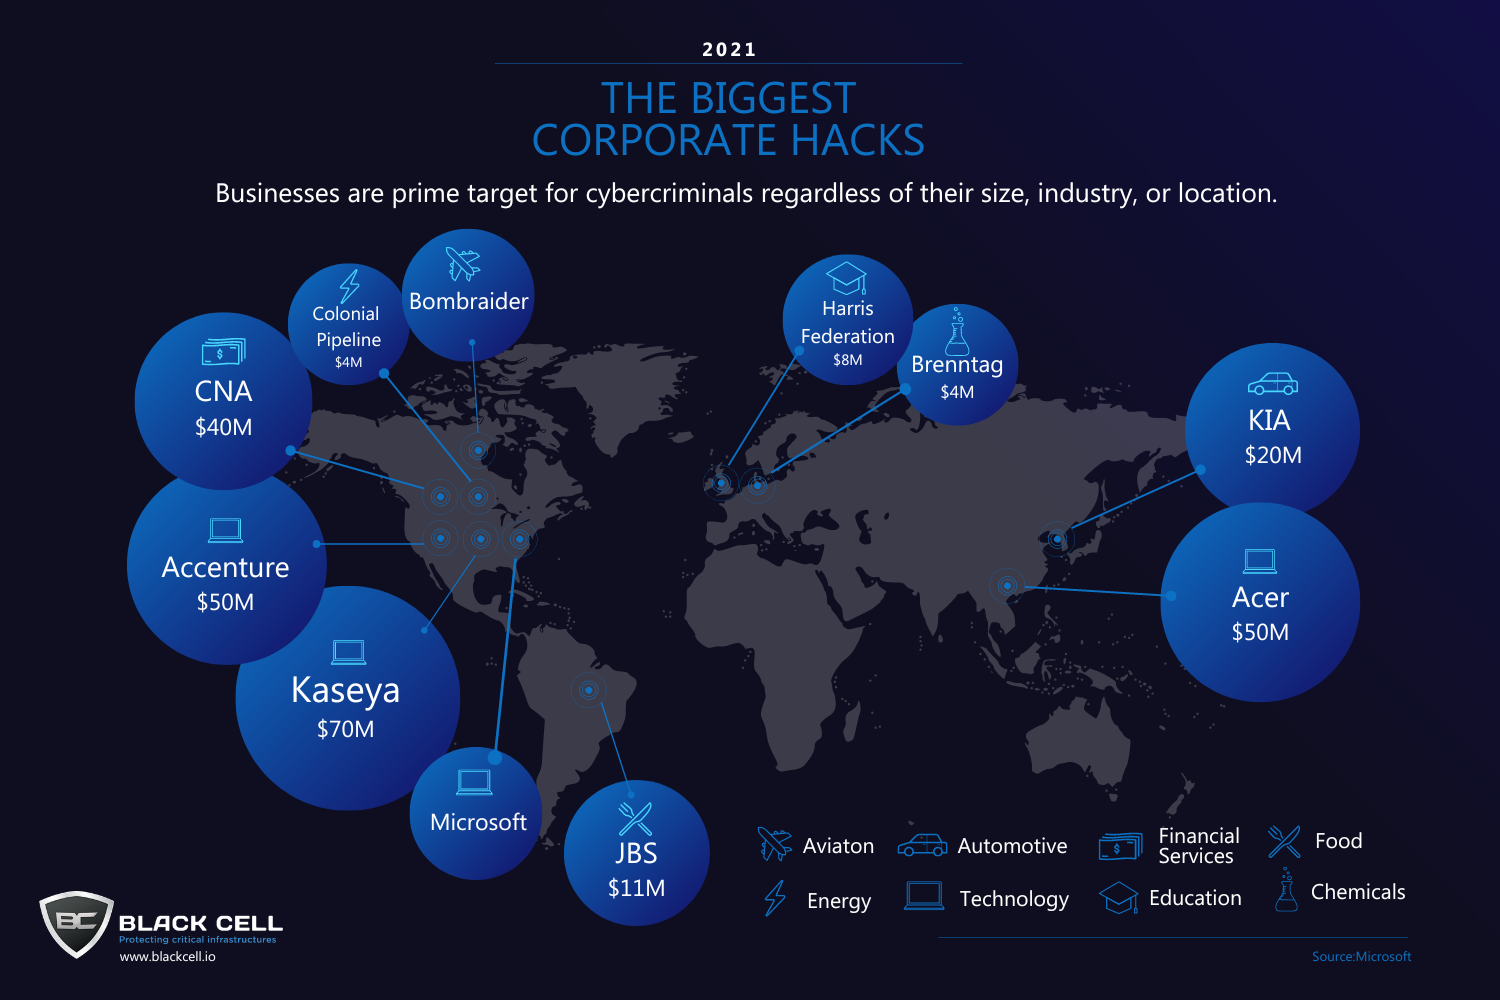 The Biggest Corporate Hacks 2021 | Infographic